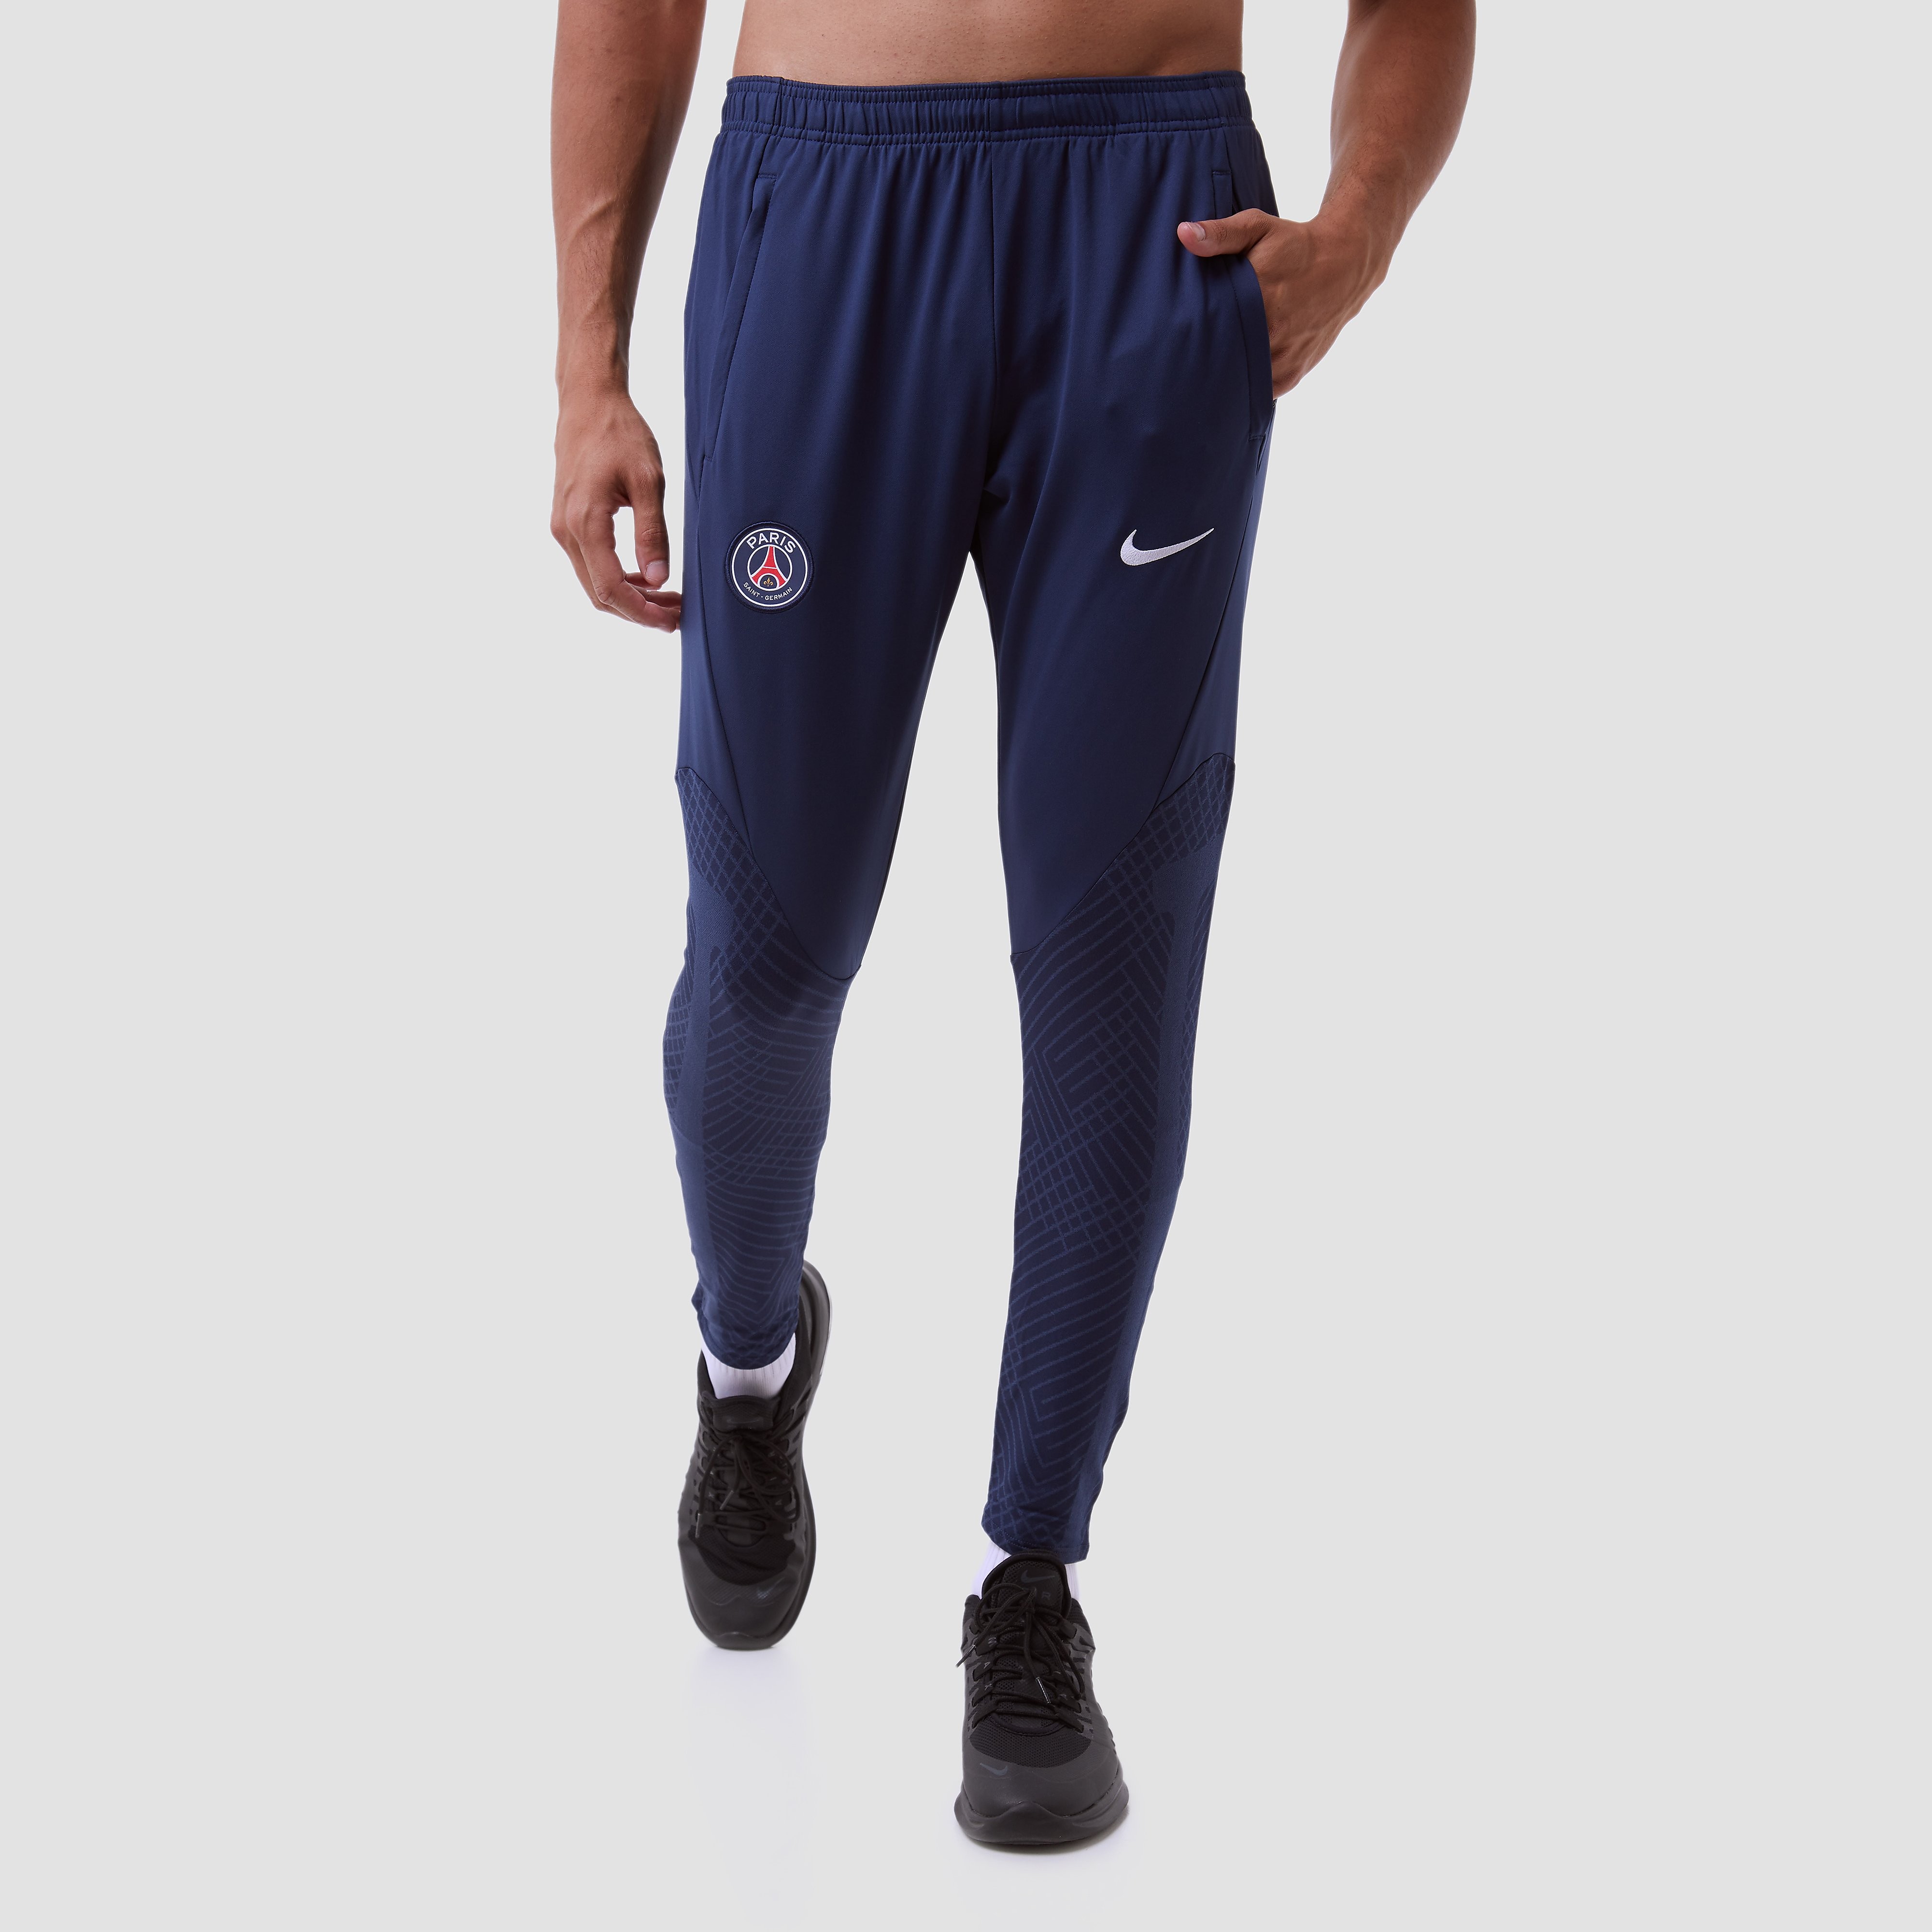 Nike Nike psg dri-fit strike trainingsbroek 22/23 blauw heren heren